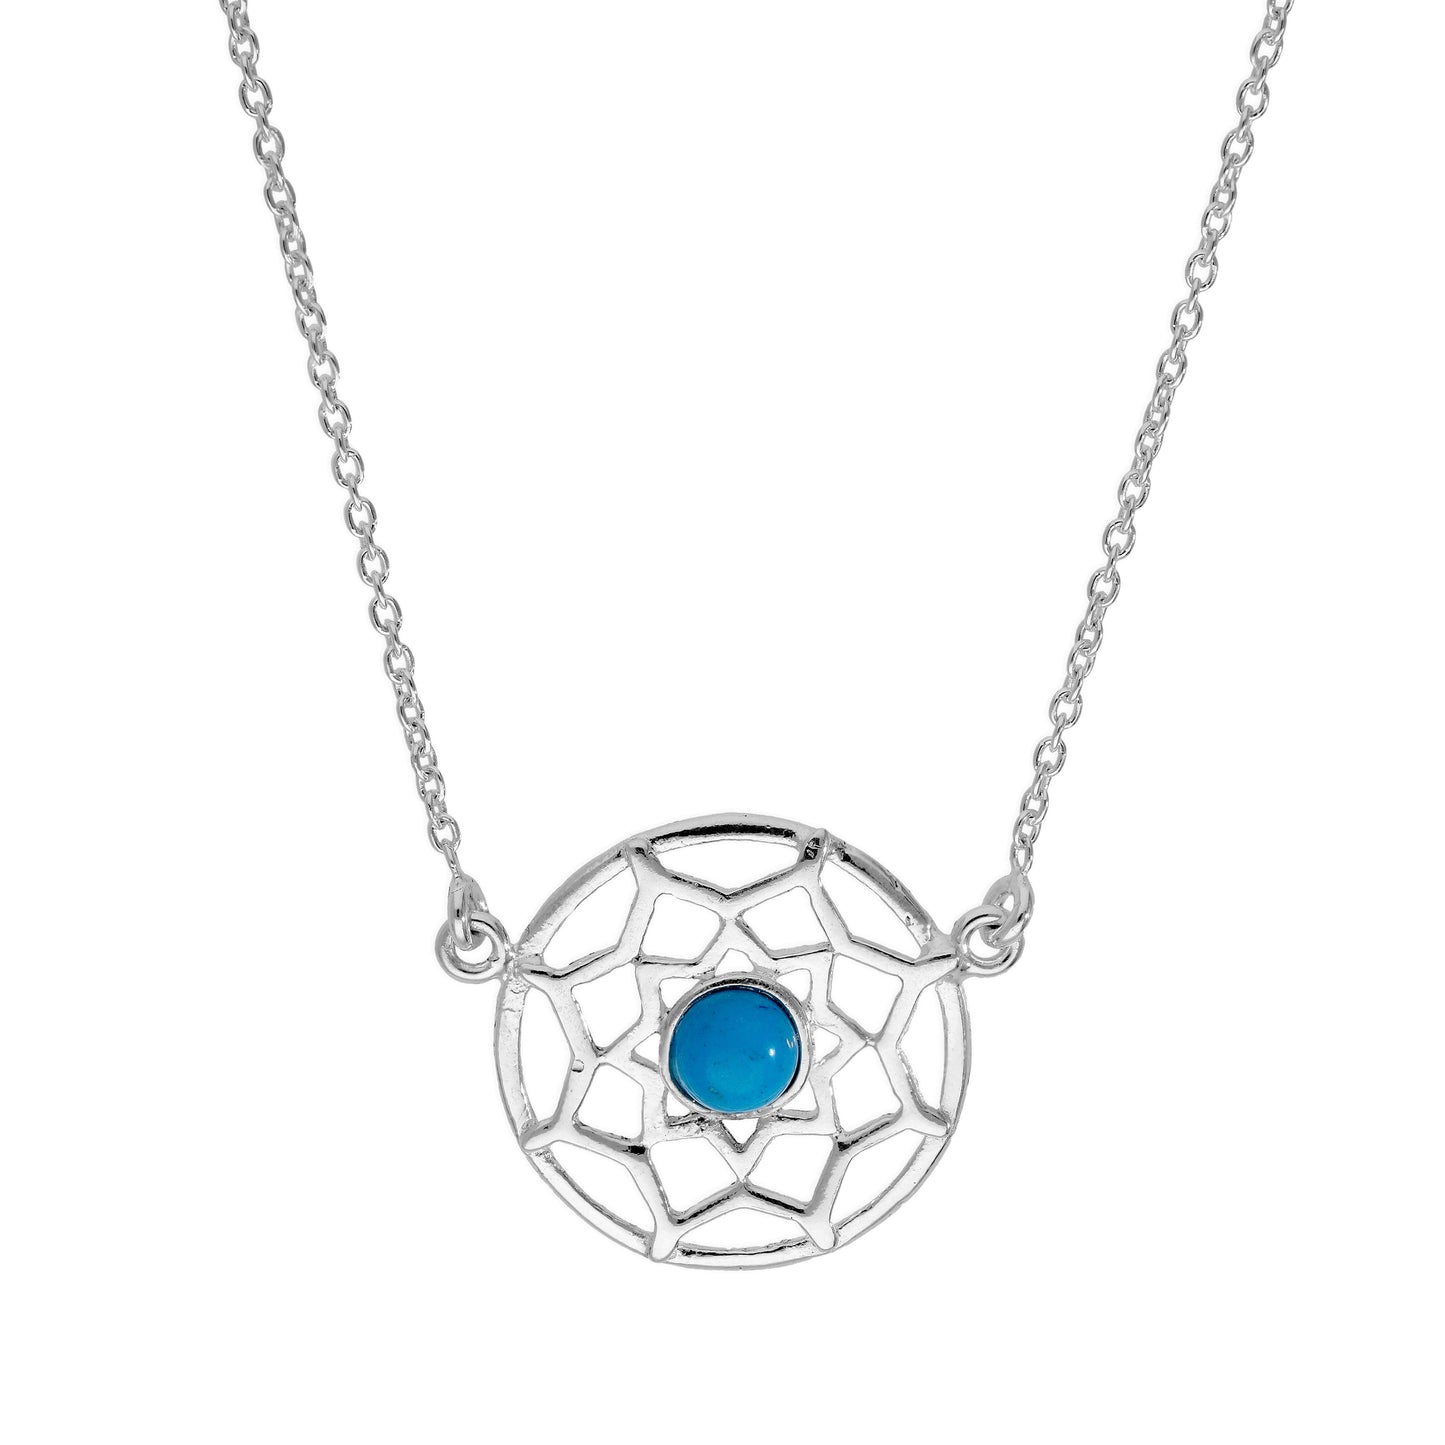 Sterling Silver & Blue Enamel Dreamcatcher Necklace w 18 Inch Chain